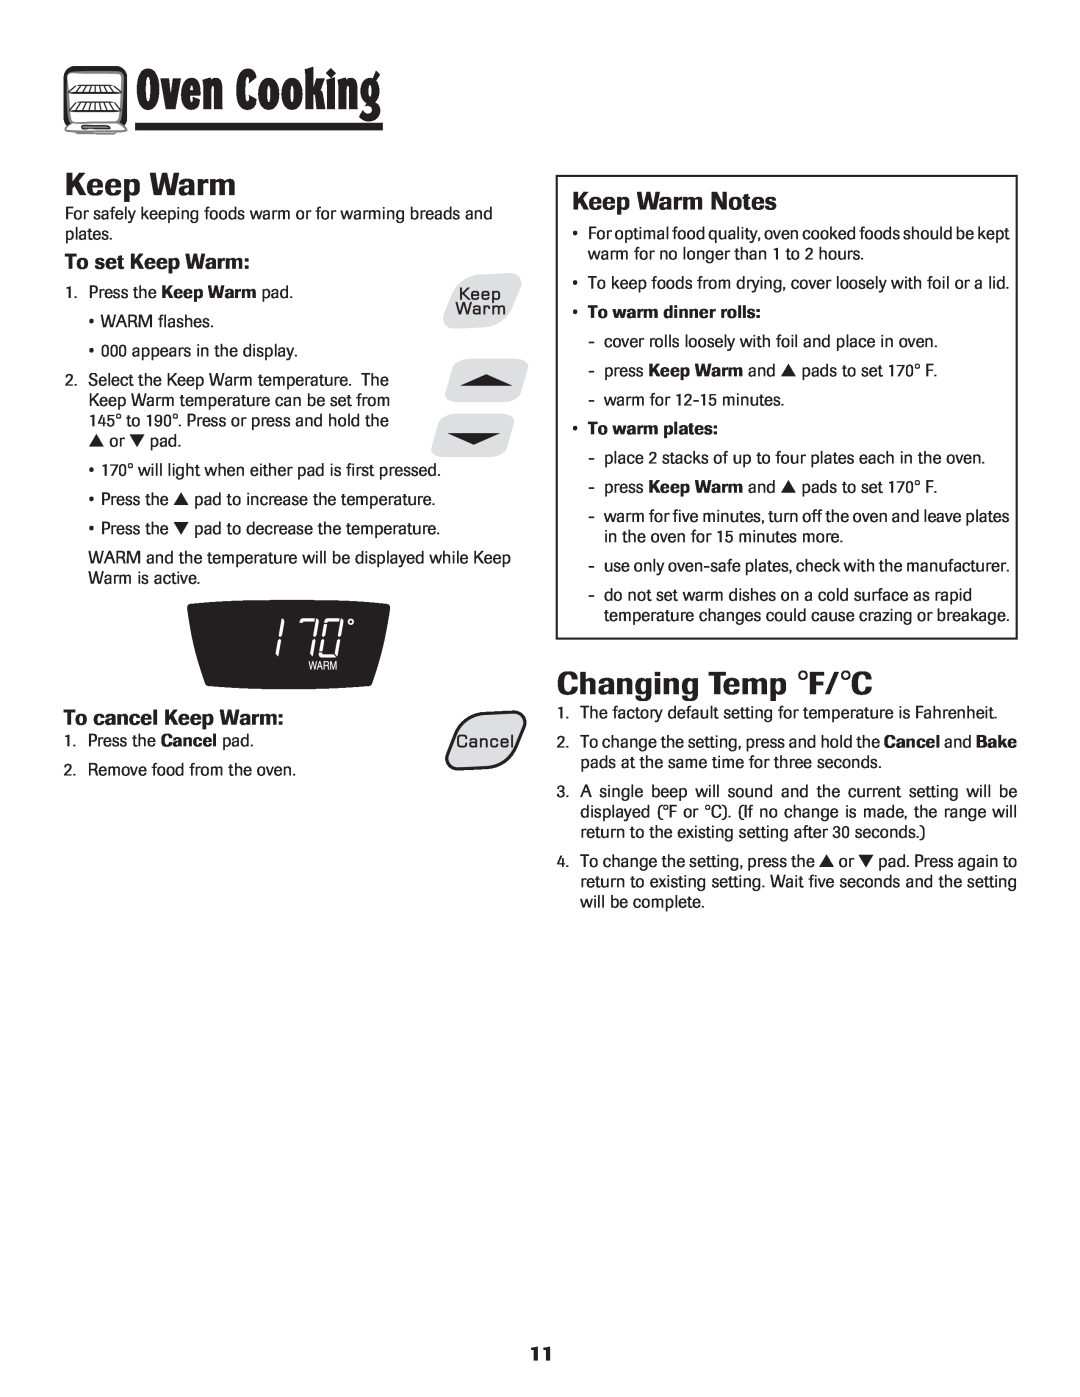 Amana 500 manual Changing Temp F/C, Keep Warm Notes, To set Keep Warm, To cancel Keep Warm, Oven Cooking 